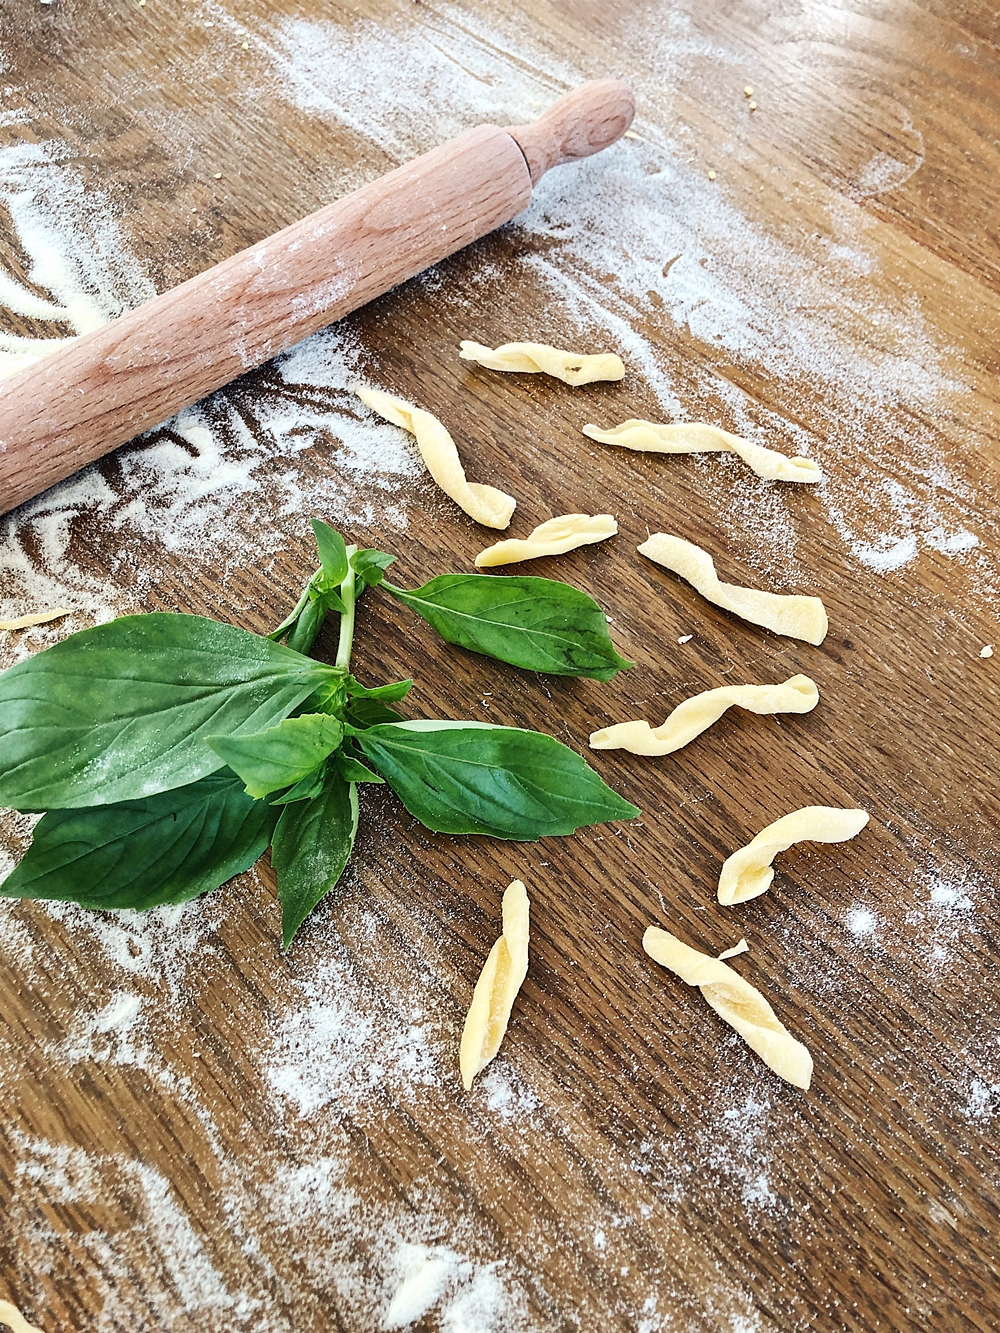 italienische Pasta selber machen - so stellst du Ravioli, Orecchiette, Tagliatelle, Farfalle & Fricelli her